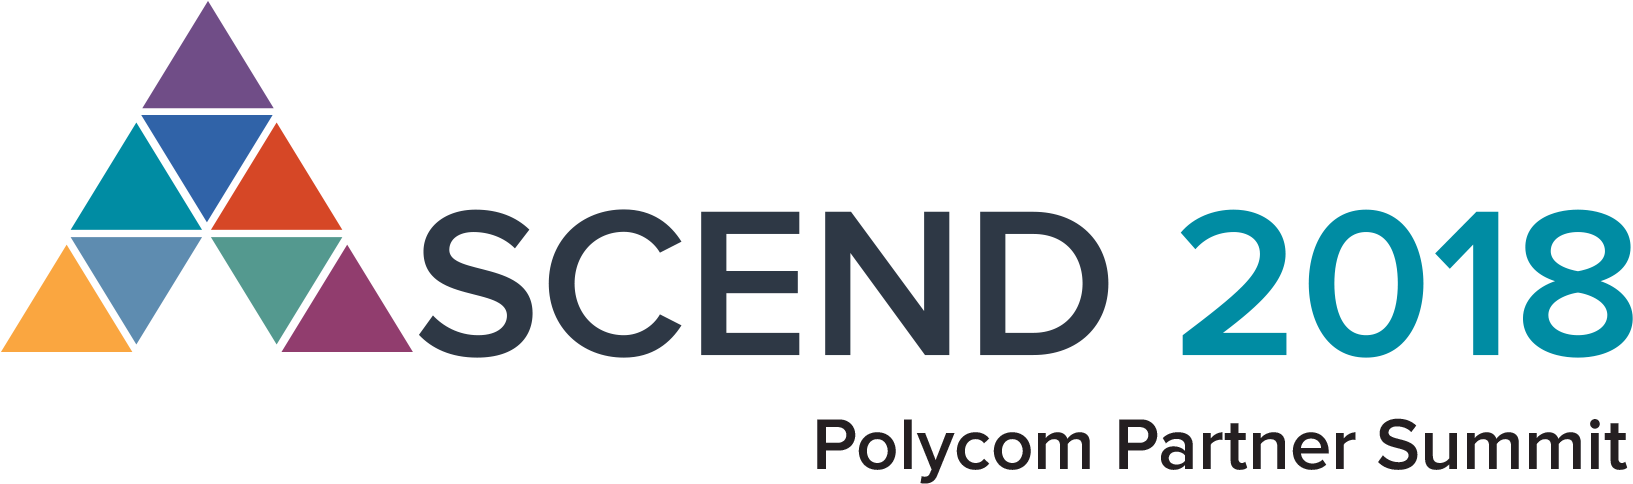 S C E N D2018 Polycom Partner Summit Logo PNG